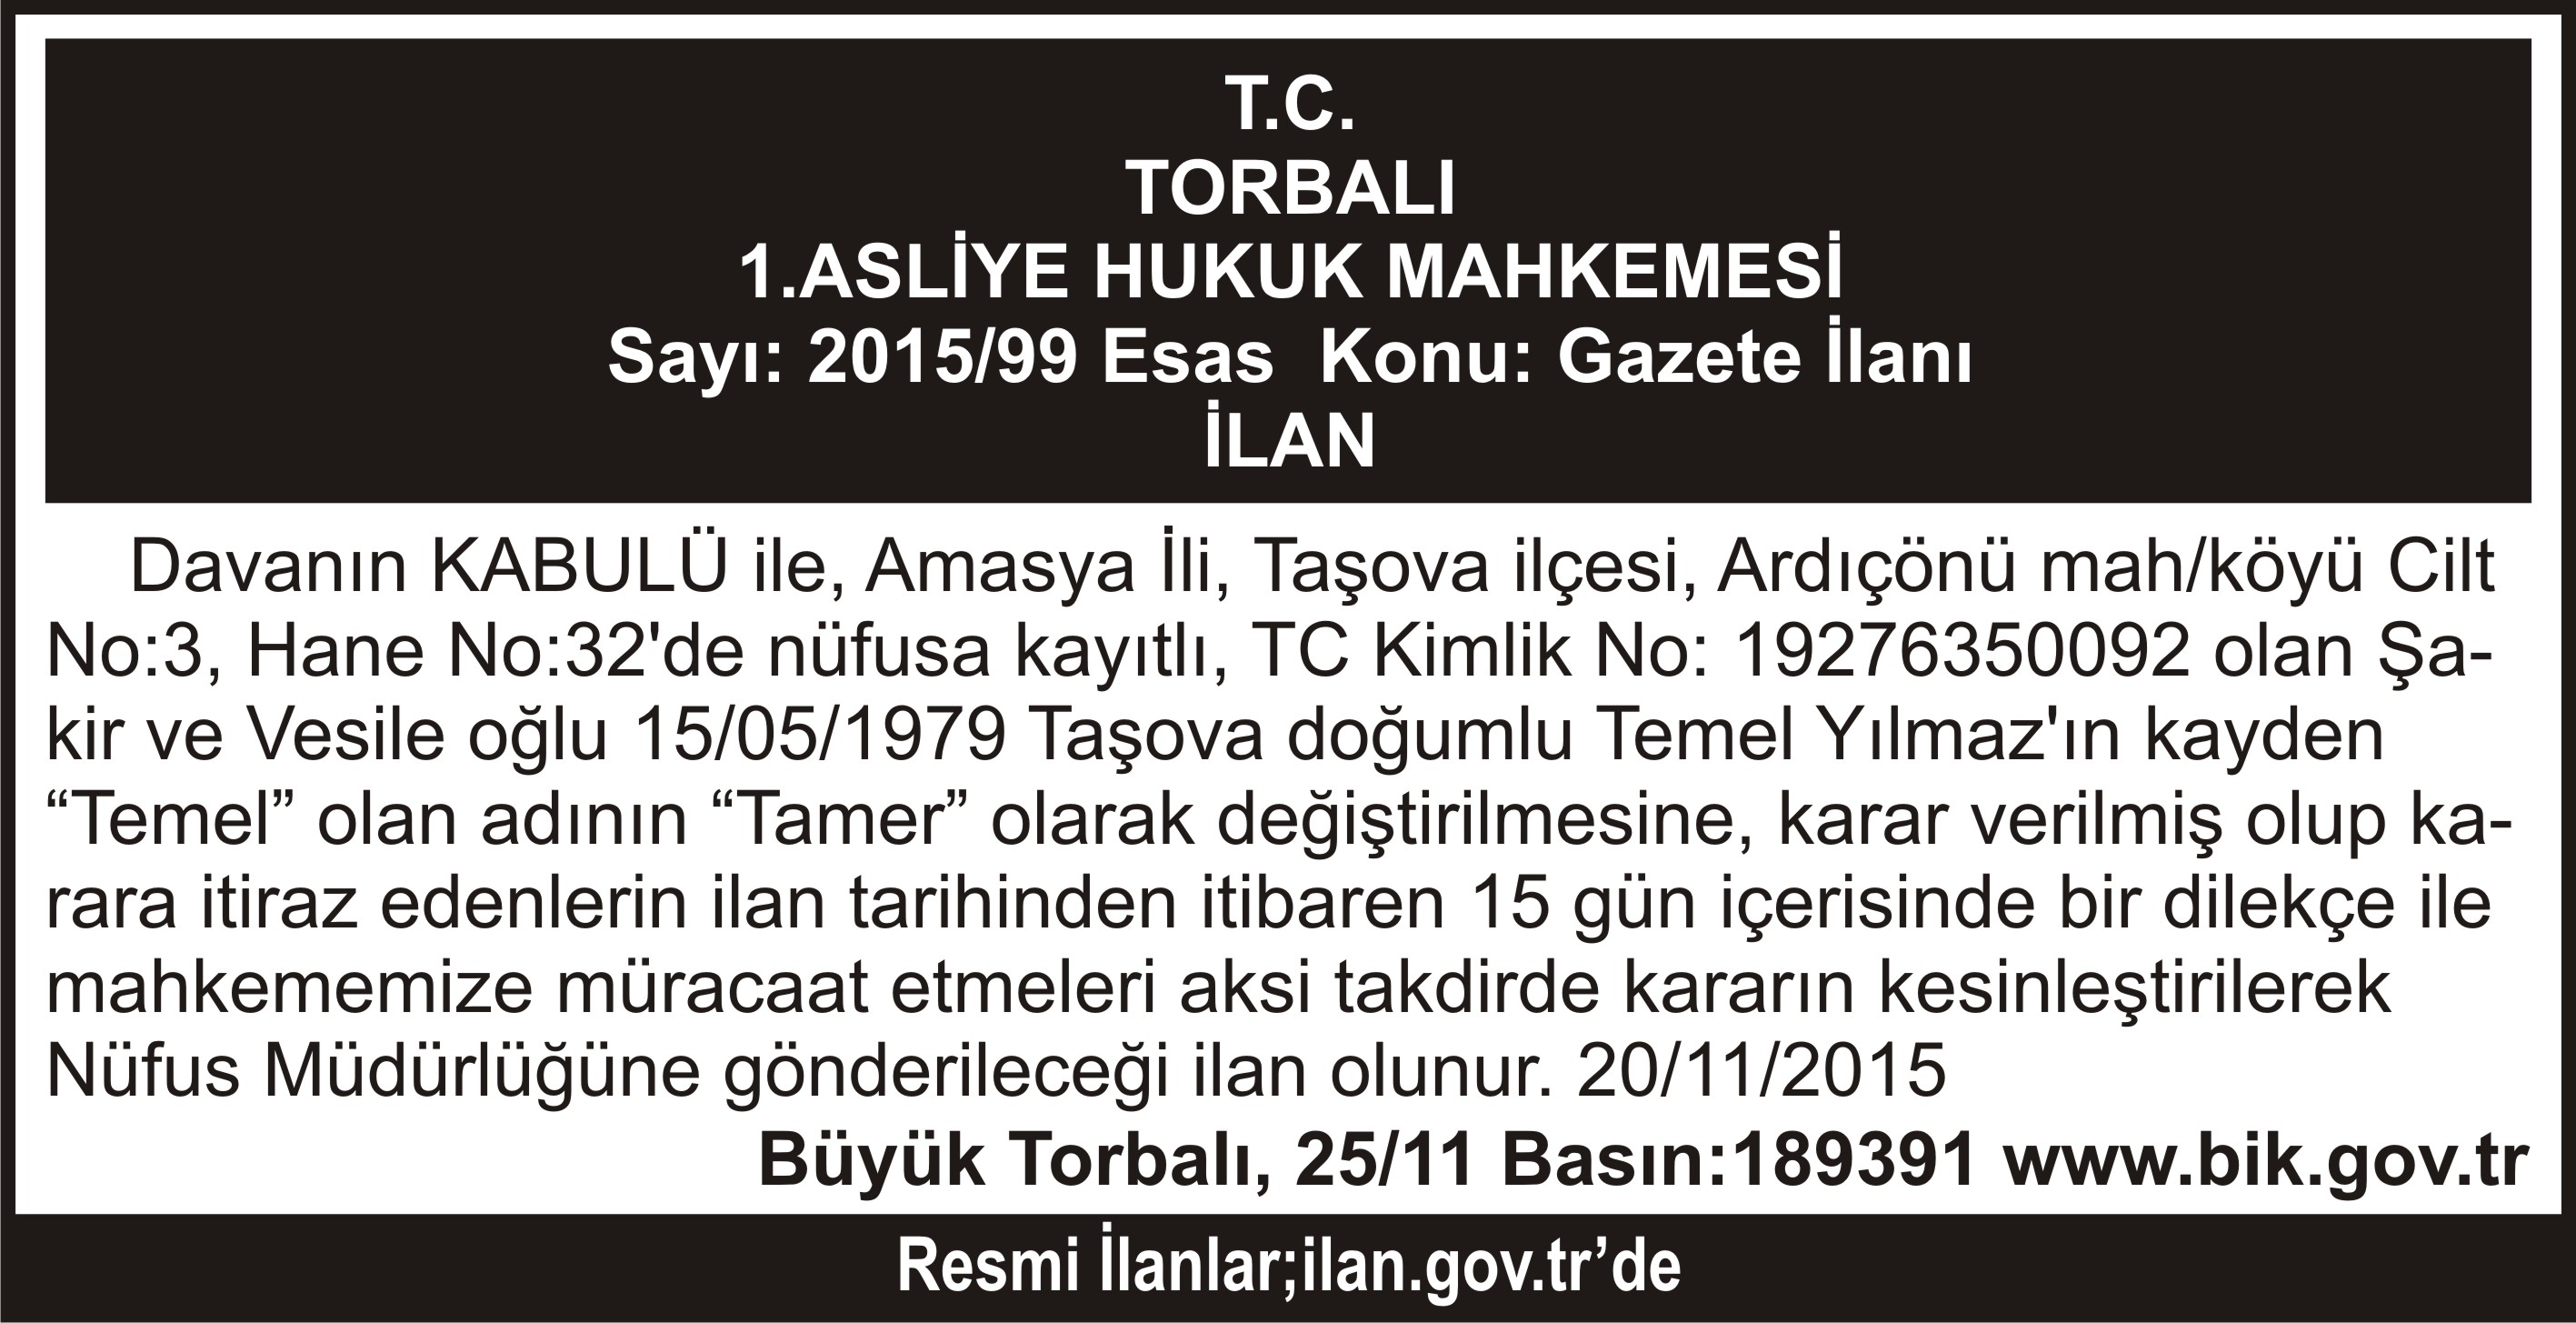 T.C. TORBALI 1.ASLİYE HUKUK MAHKEMESİ SAYI.2015-99 BASIN.189391 25.11.2015